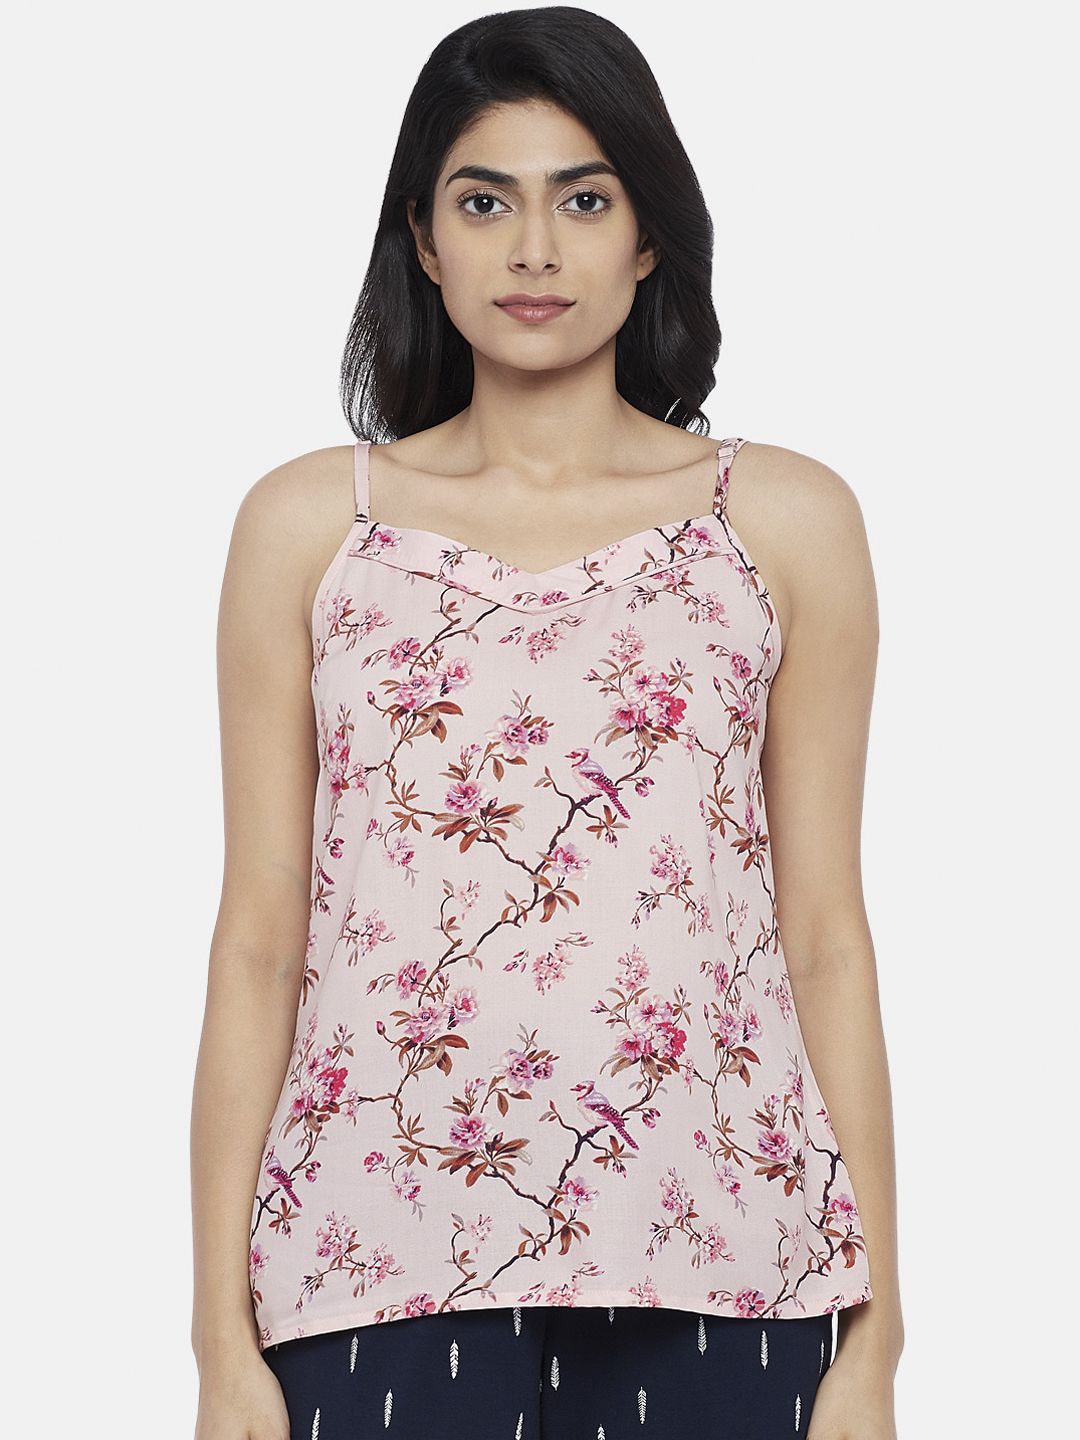 Dreamz by Pantaloons Pink Floral Printed Regular Lounge tshirt Price in India